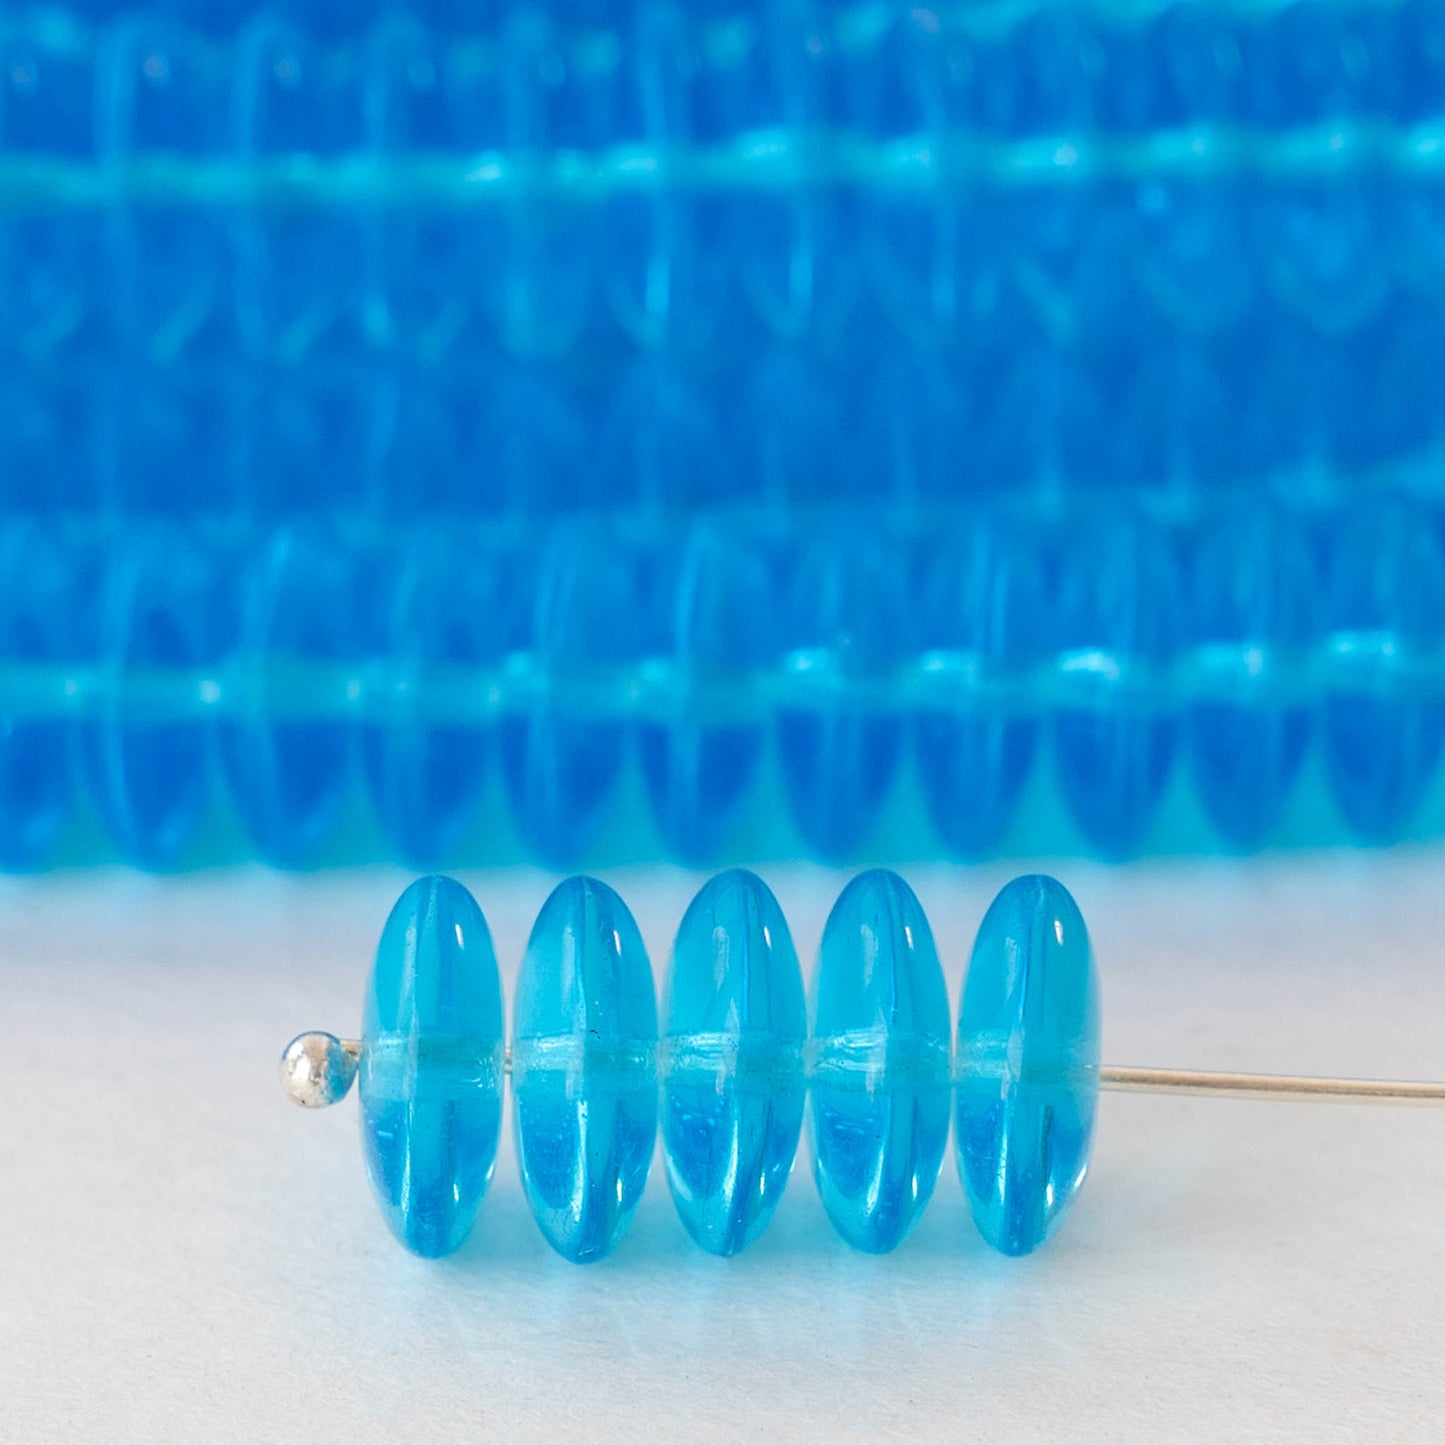 10mm Rondelle Beads - Aqua Blue  - 30 Beads